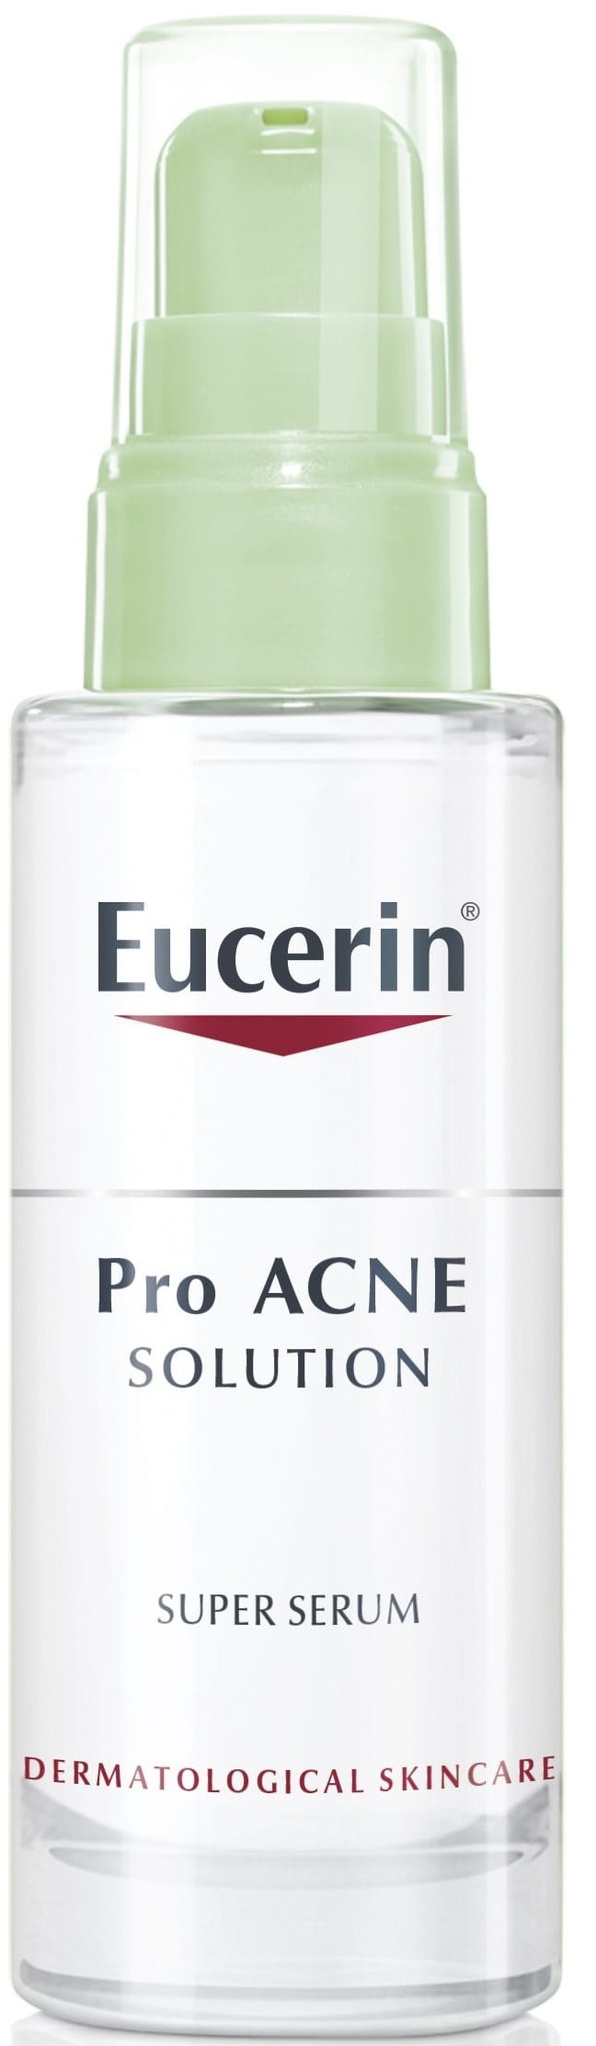 Eucerin Pro Acne Super Serum